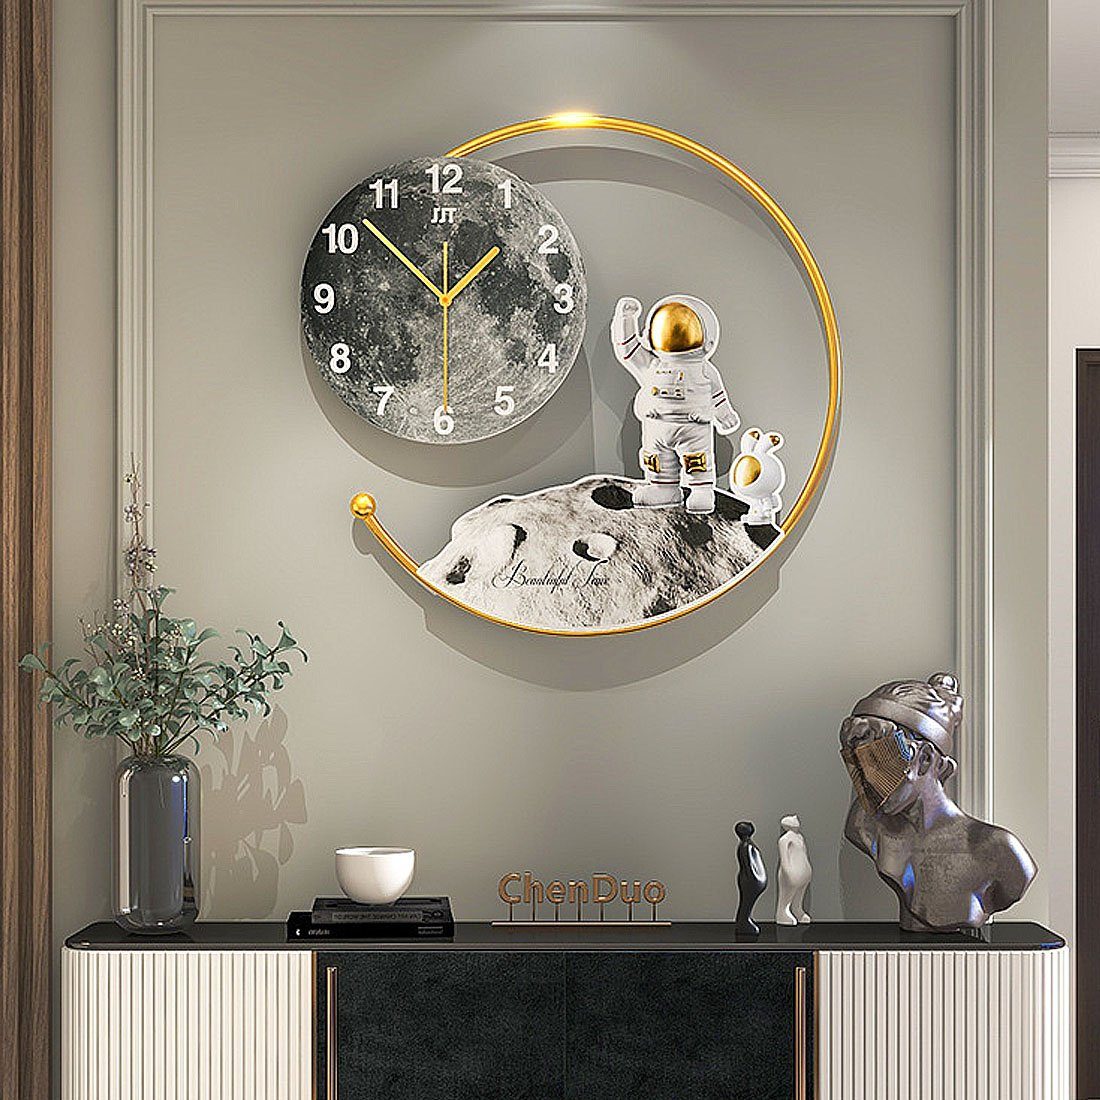 DÖRÖY Wanduhr 40cm Wanduhr,dekorative stille moderne Astronaut Uhr Wanduhr, kreative